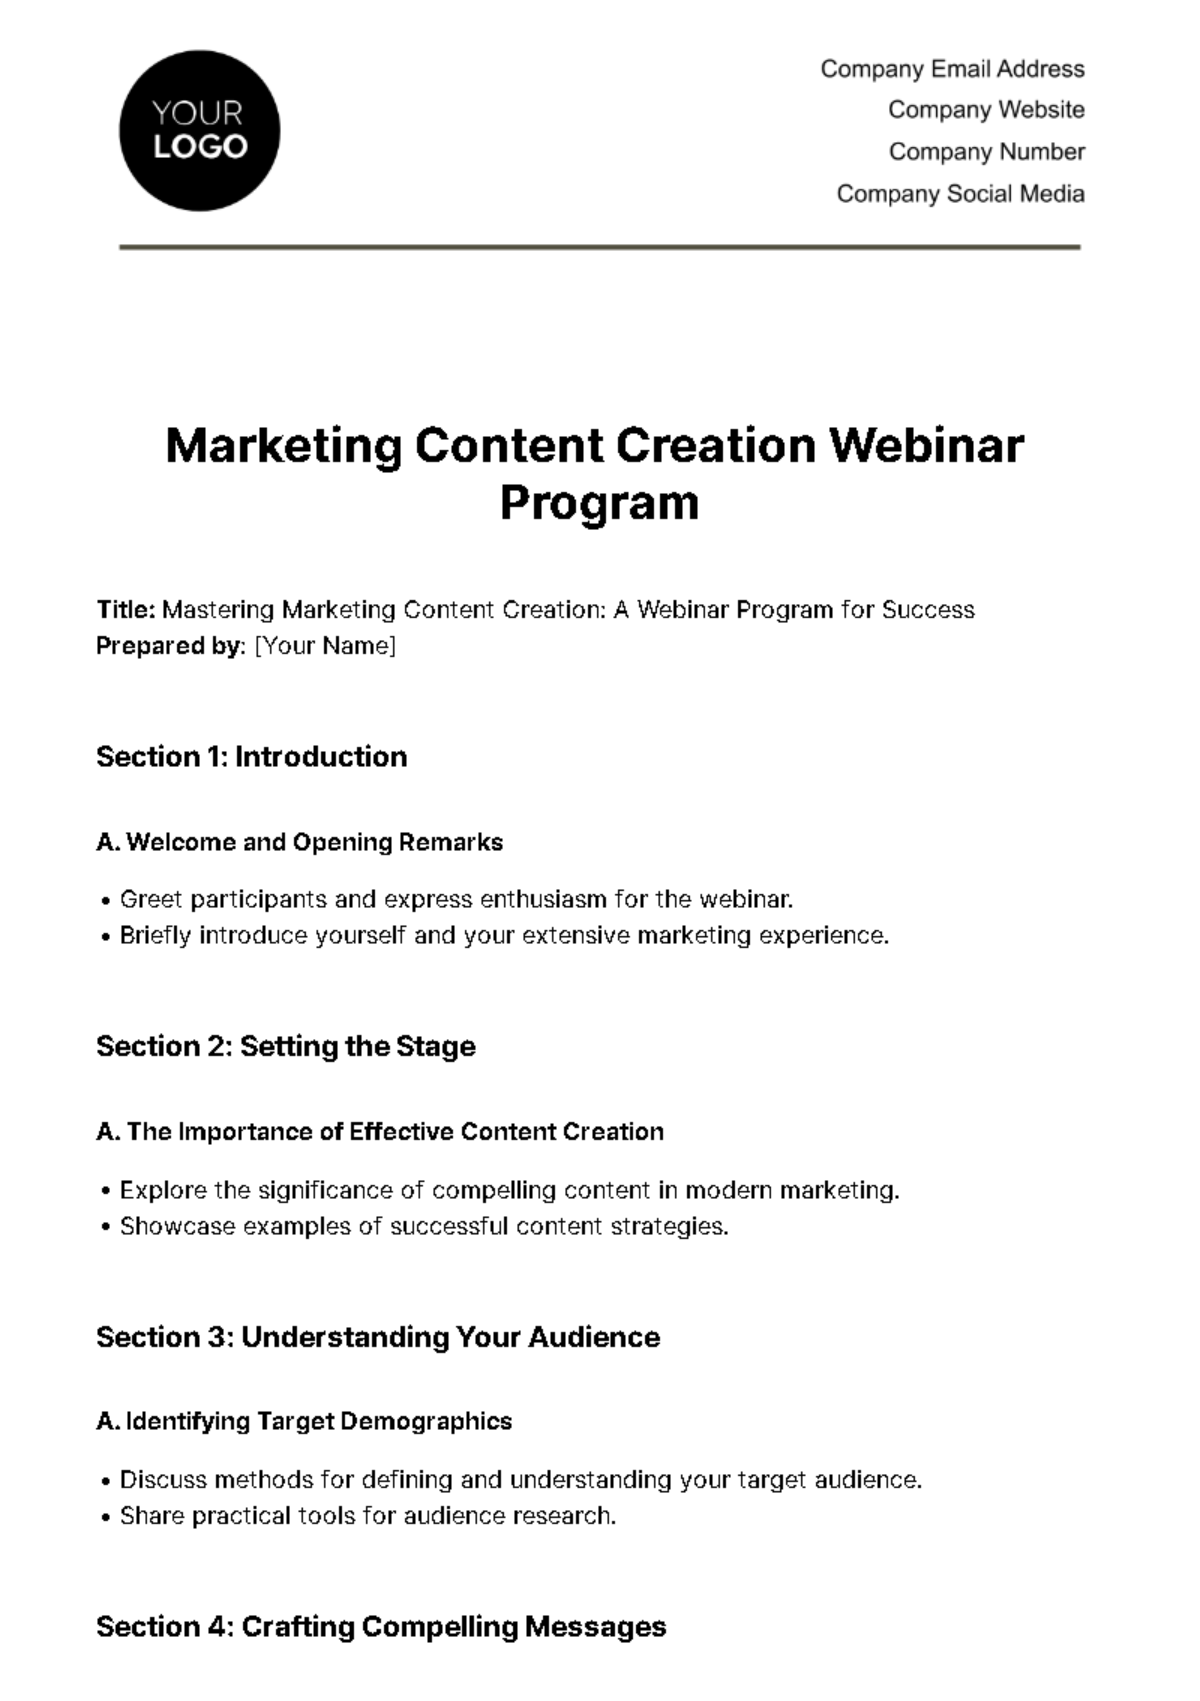 Marketing Content Creation Webinar Program Template